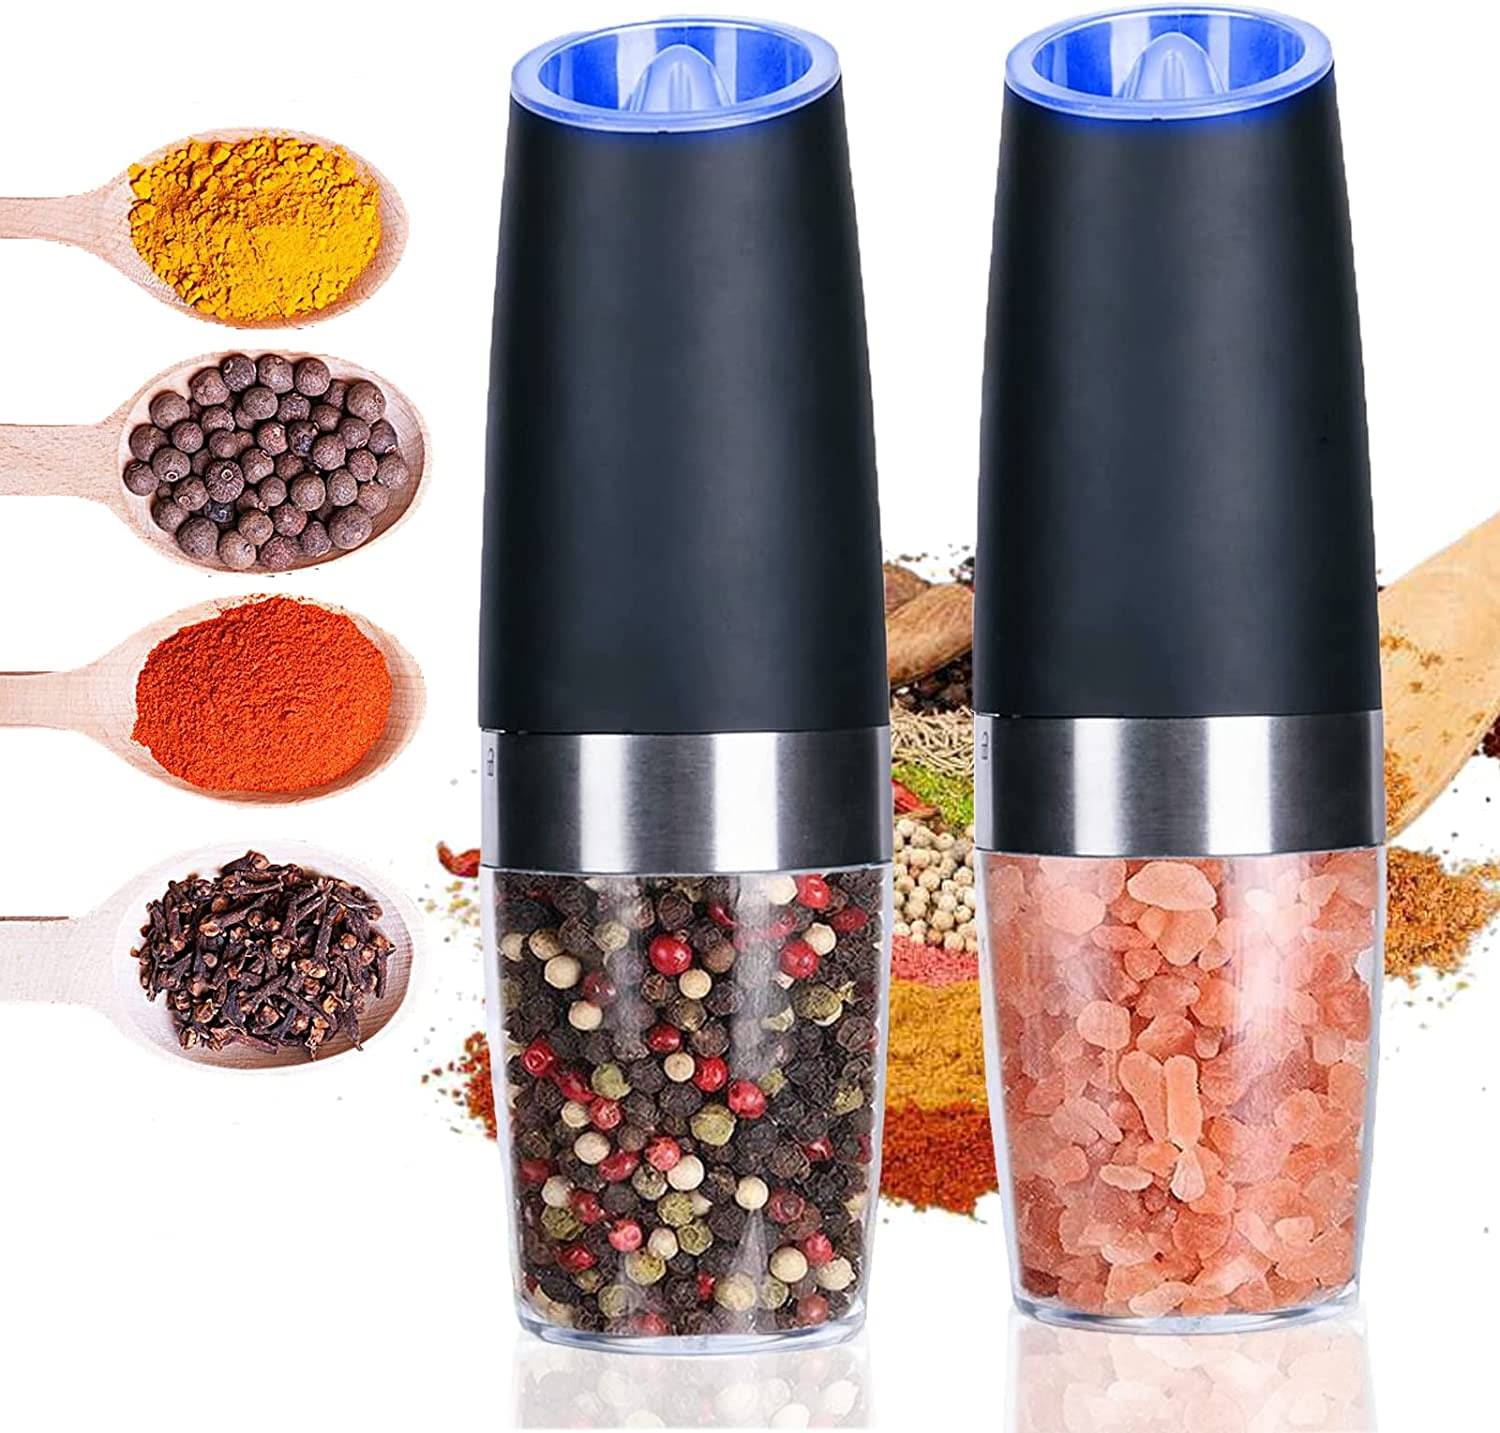 Homchum Gravity Electric Salt Grinder, Pepper Grinder, Automatic